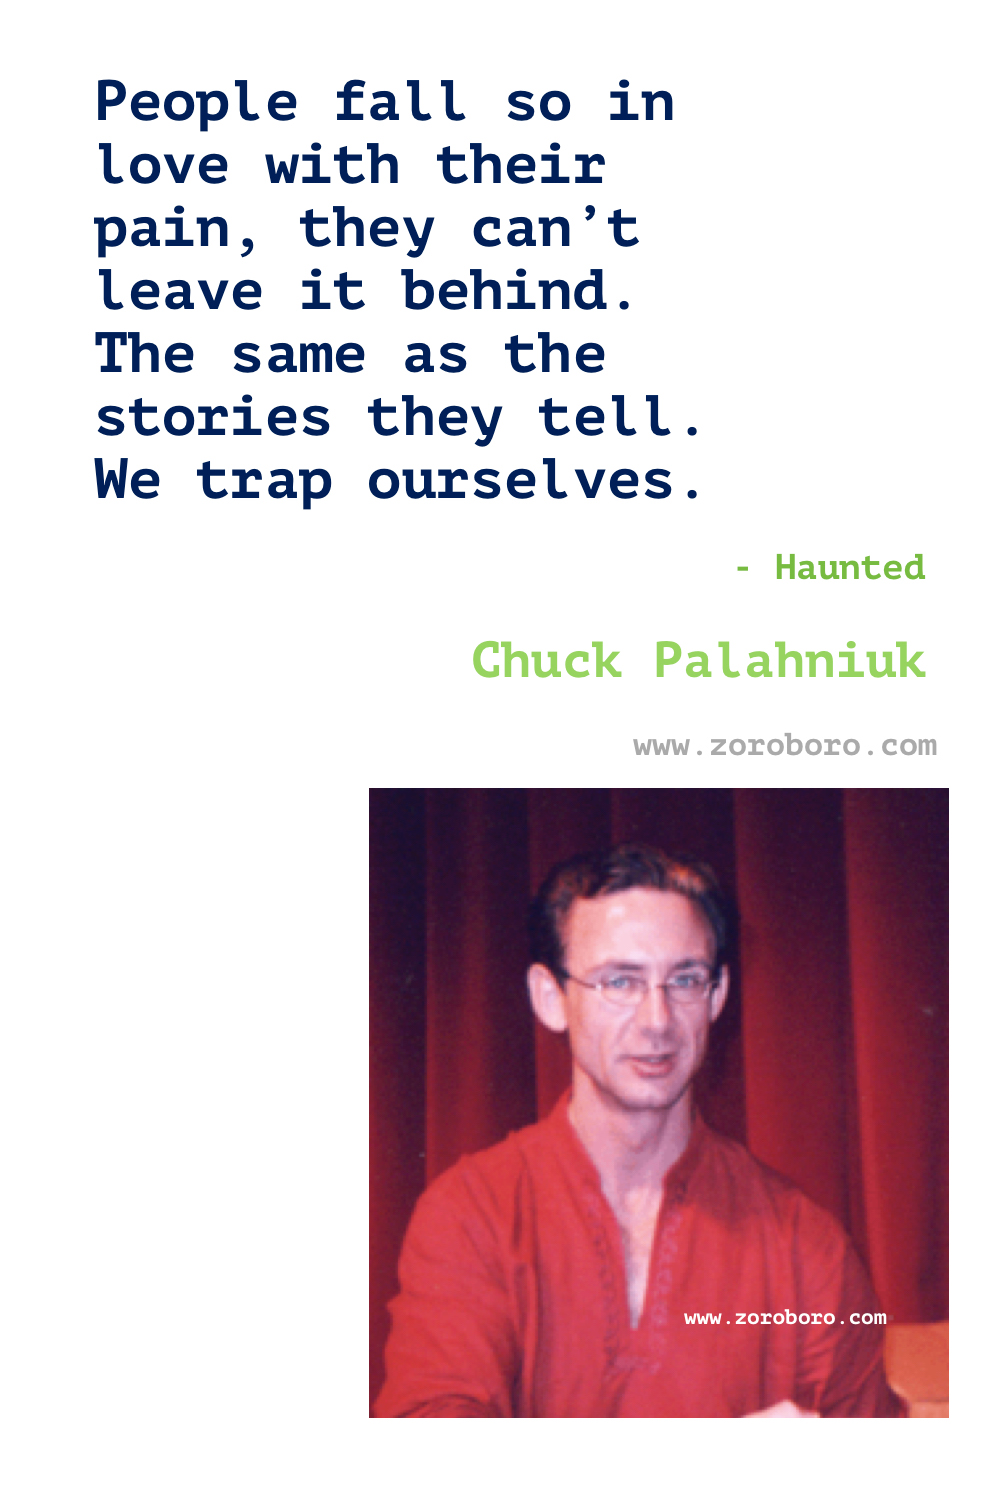 Chuck Palahniuk Quotes Part 1. Chuck Palahniuk Books Quotes. Chuck Palahniuk Fight Club, Invisible Monsters, Choke & Survivor (Palahniuk novel). Fight Club Quotes. Fight Club Book. Chuck Palahniuk Quotes.